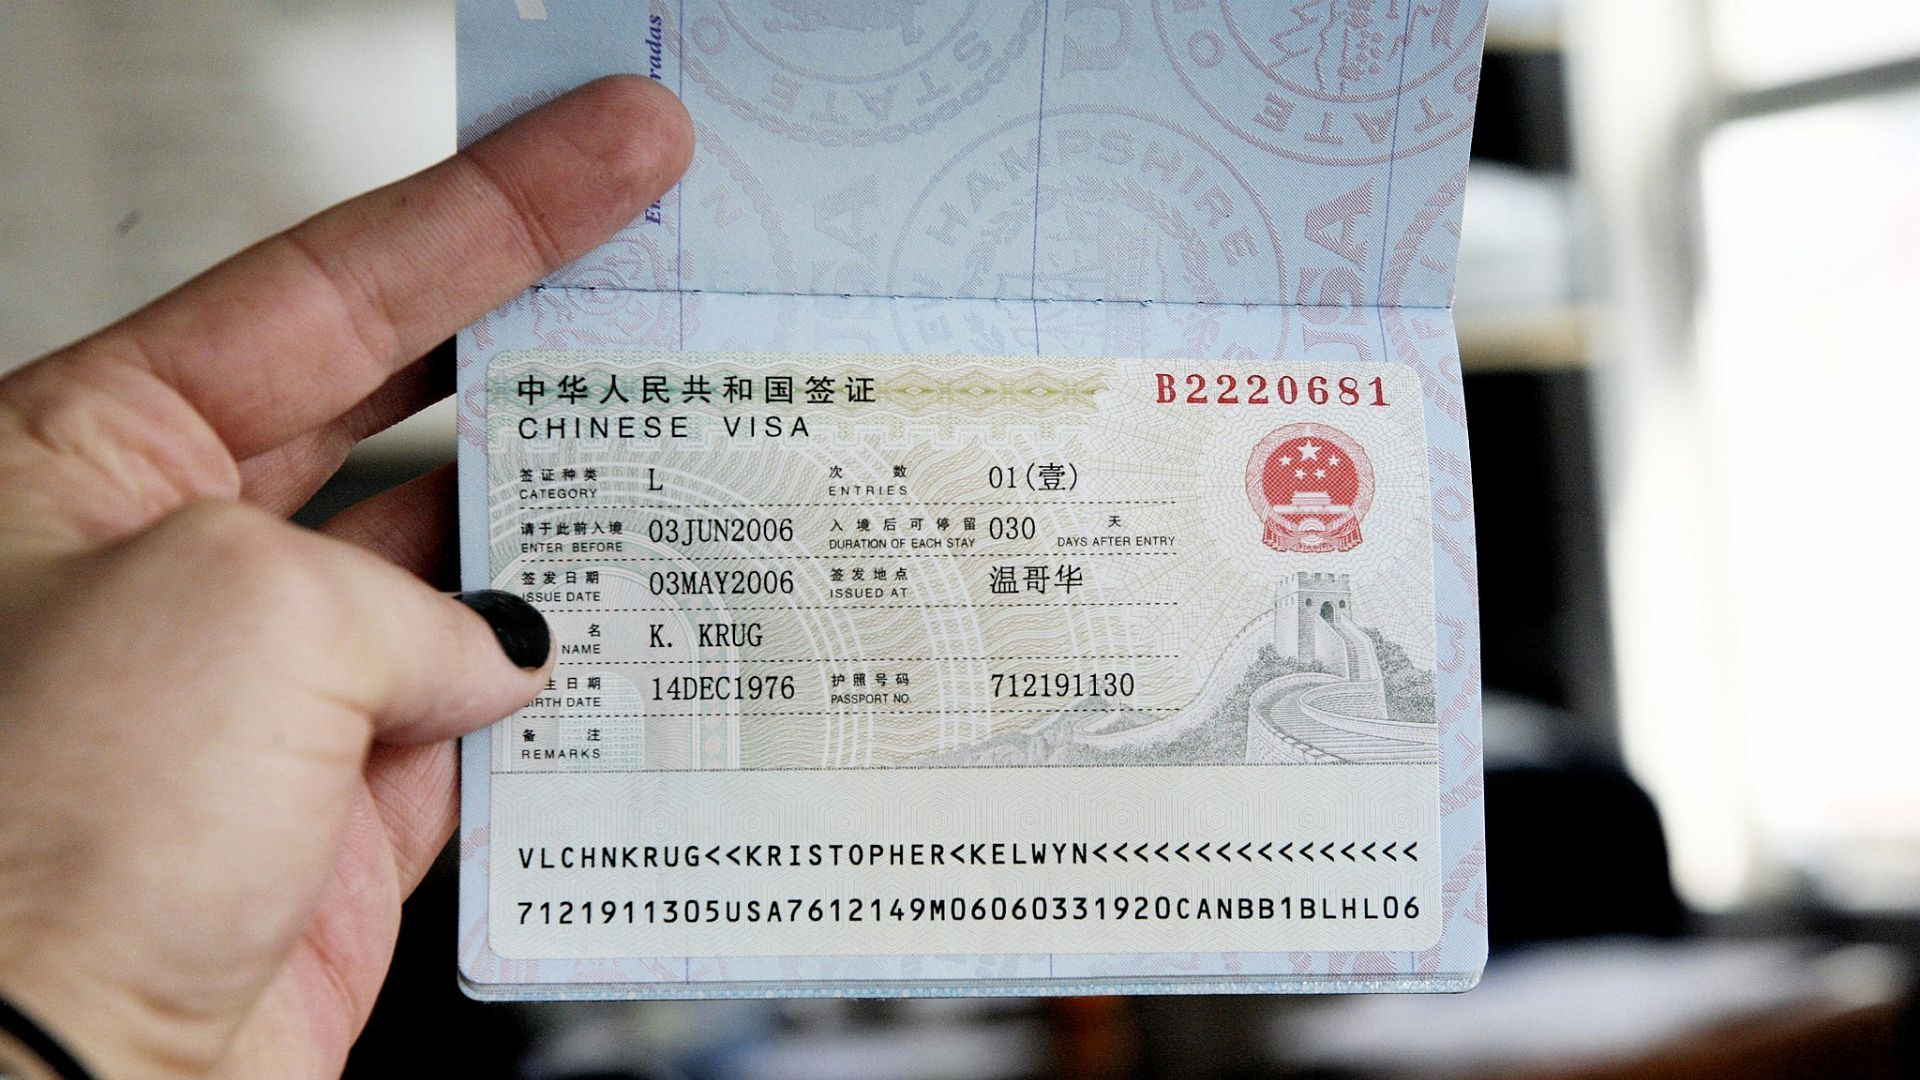 travel agency to apply china visa